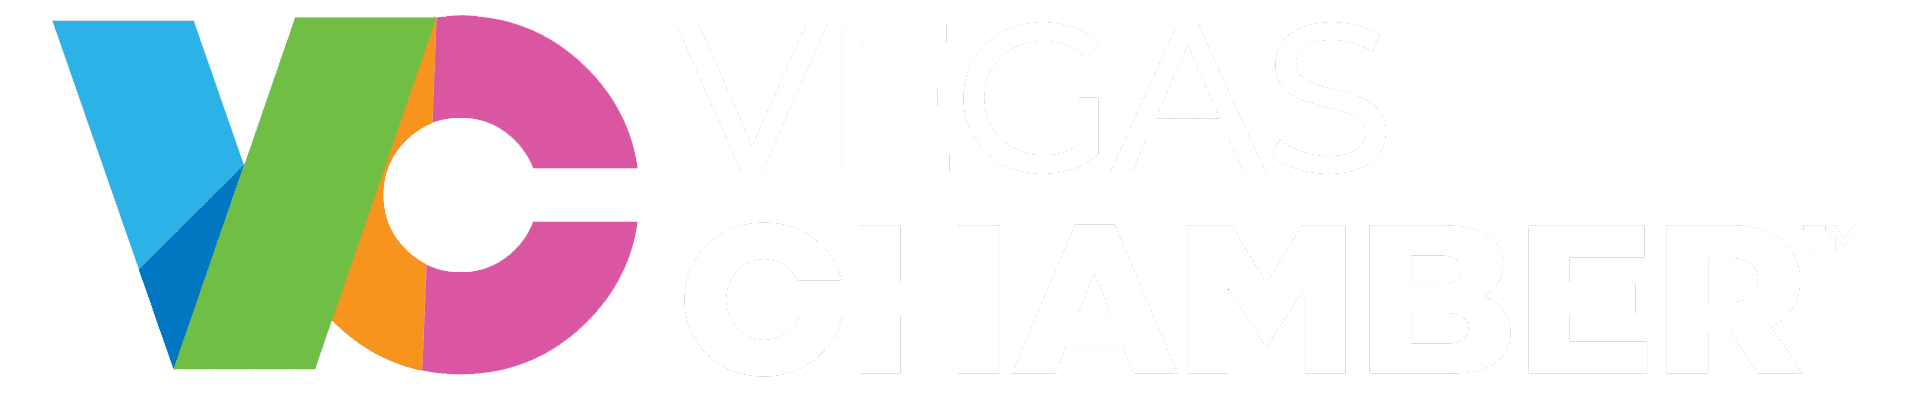 Vegas Chamber Logo